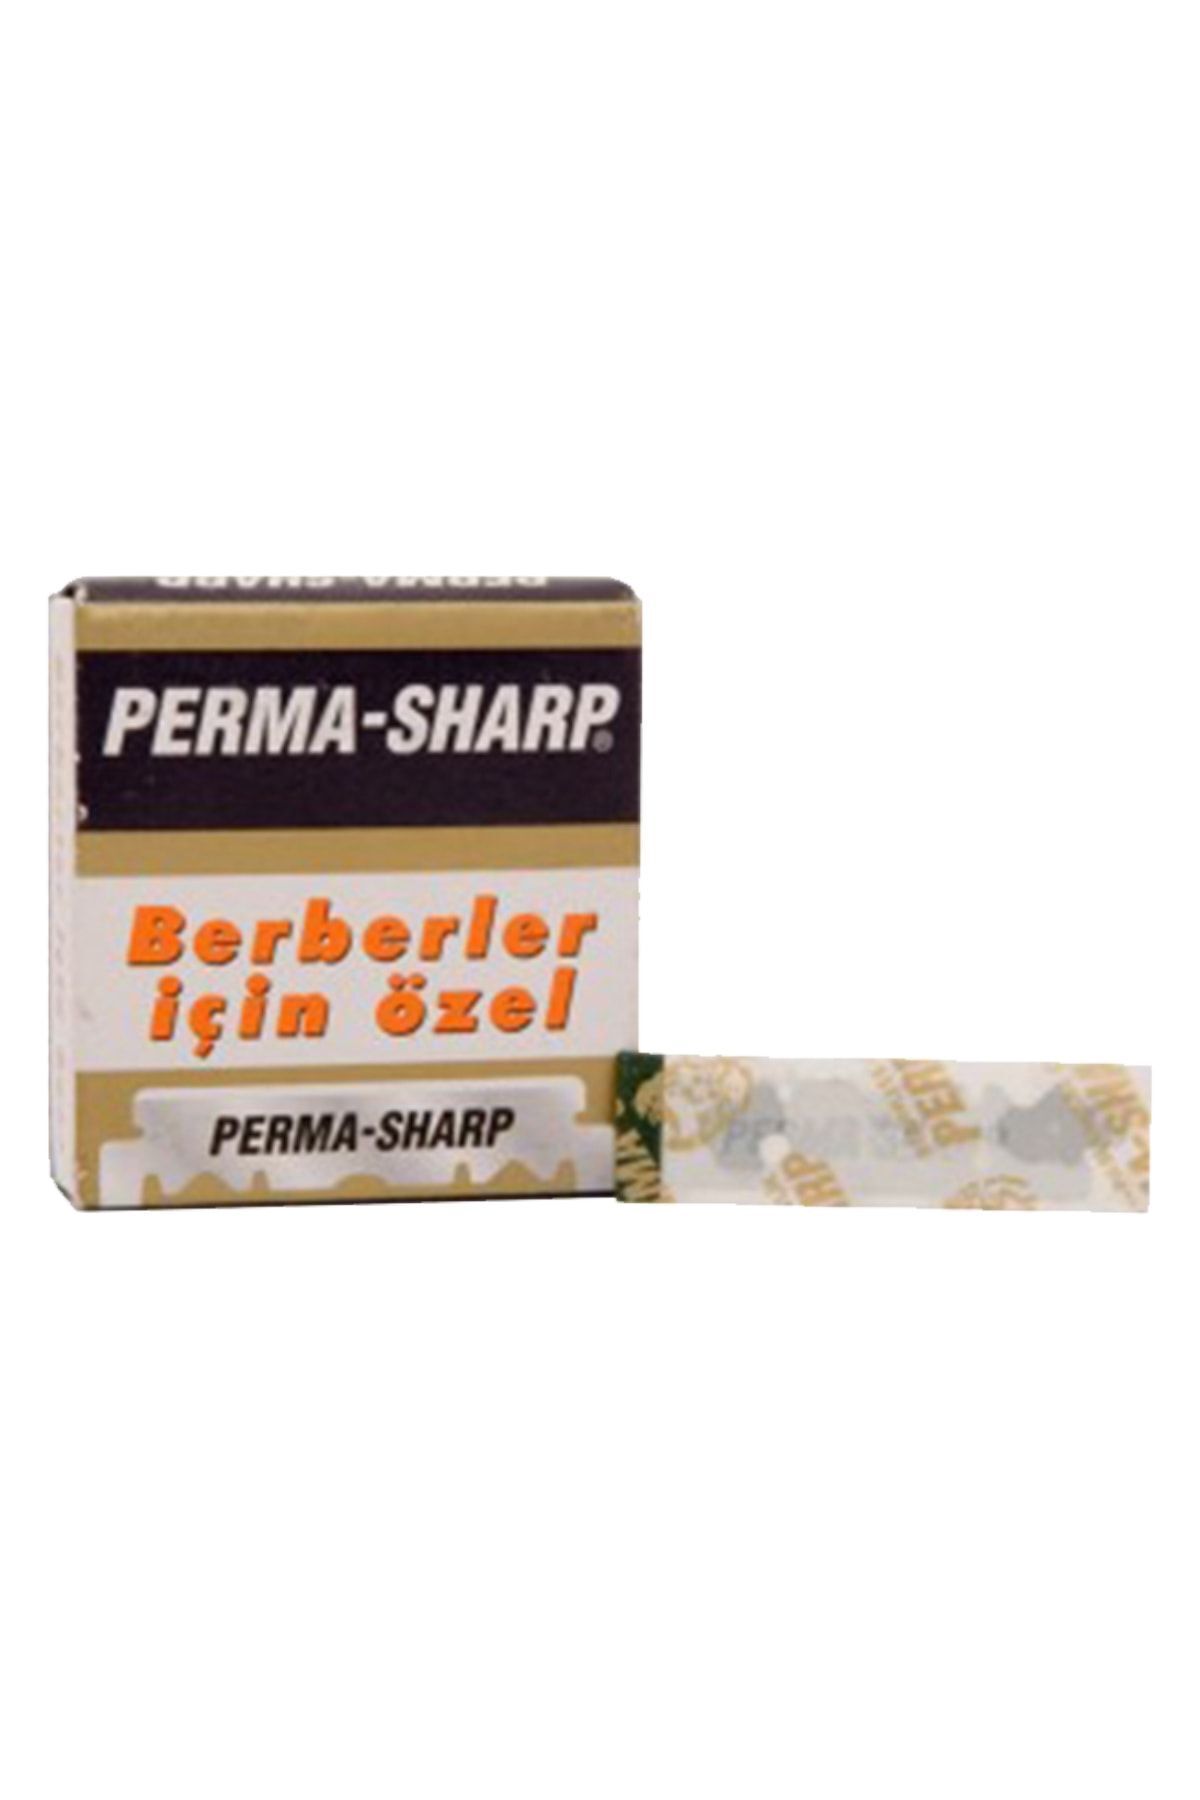 Permasharp Perma-sharp Yarım Jilet 100’lü